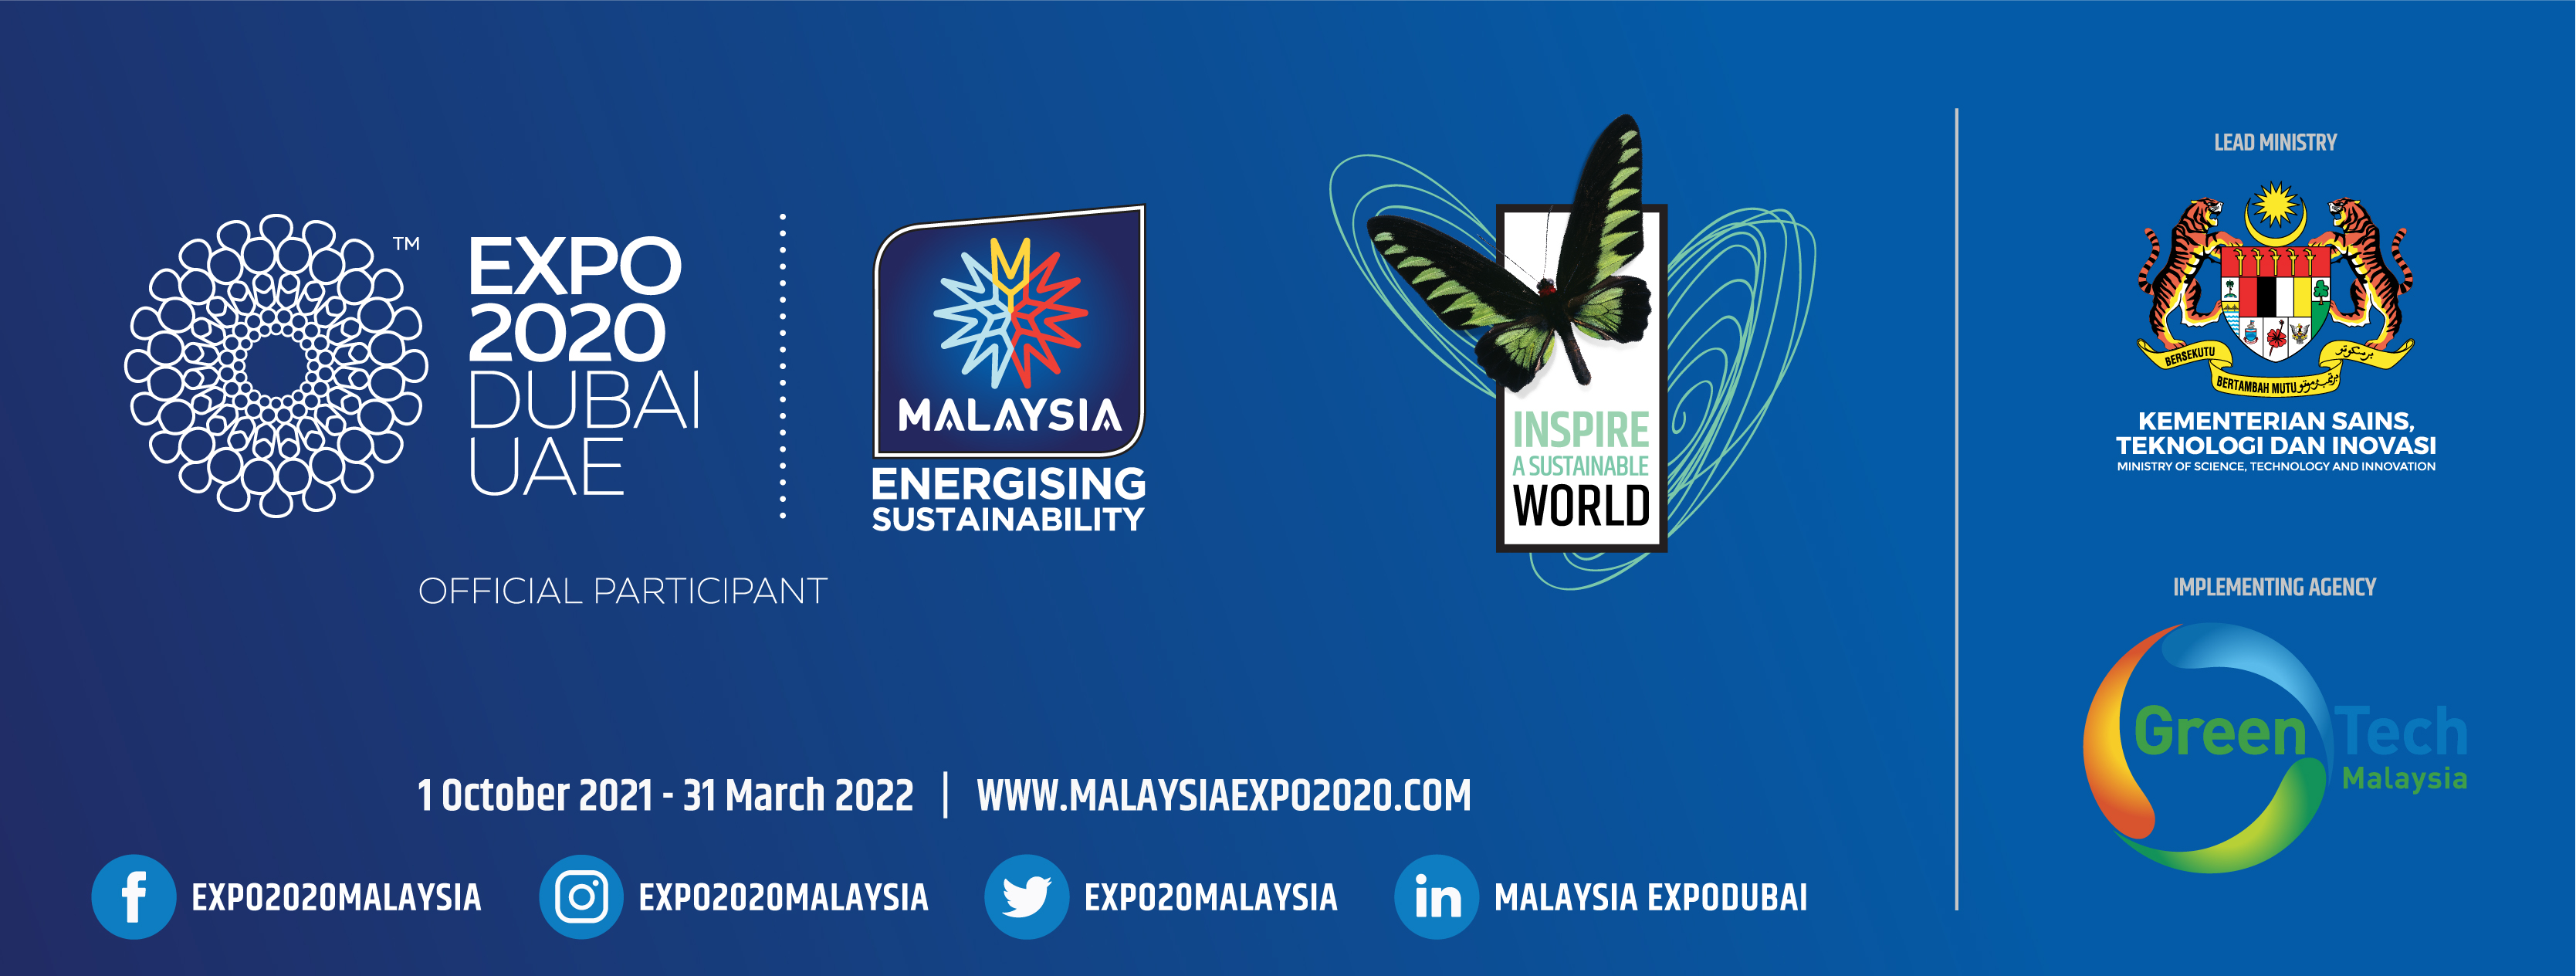 Malaysia Pavilion Web Banner - 01.jpg